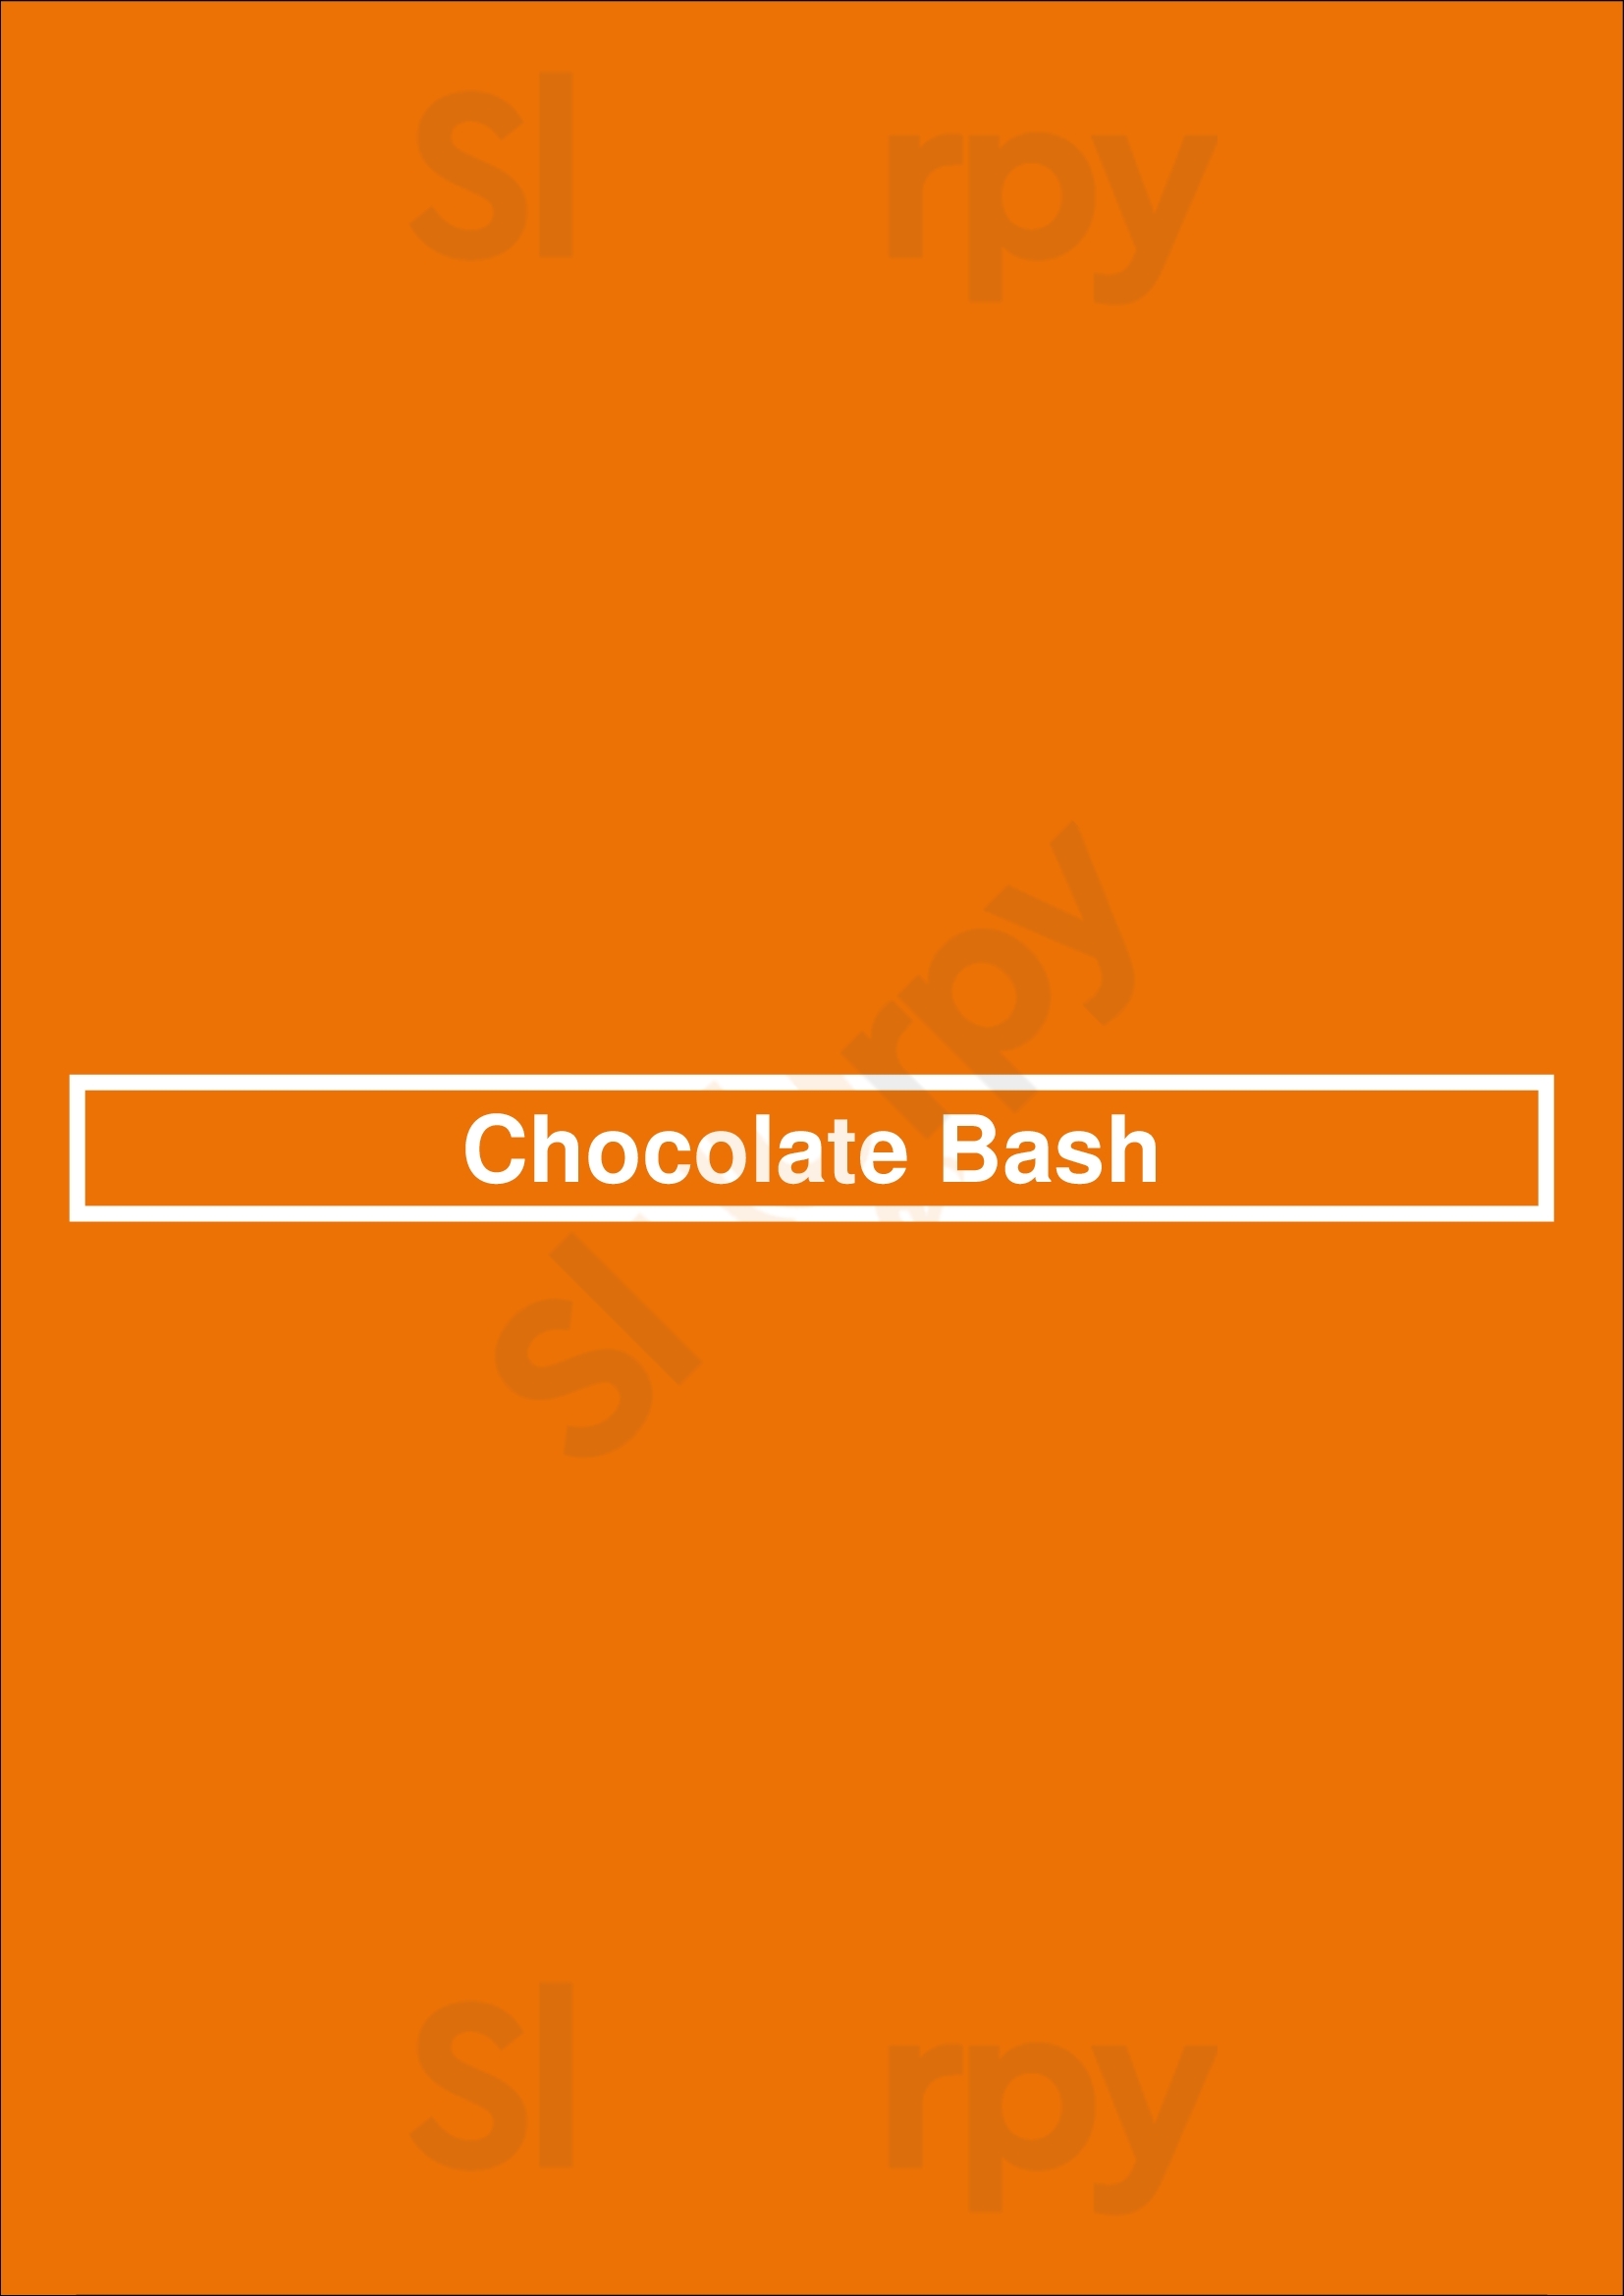 Chocolate Bash Newport Beach Menu - 1